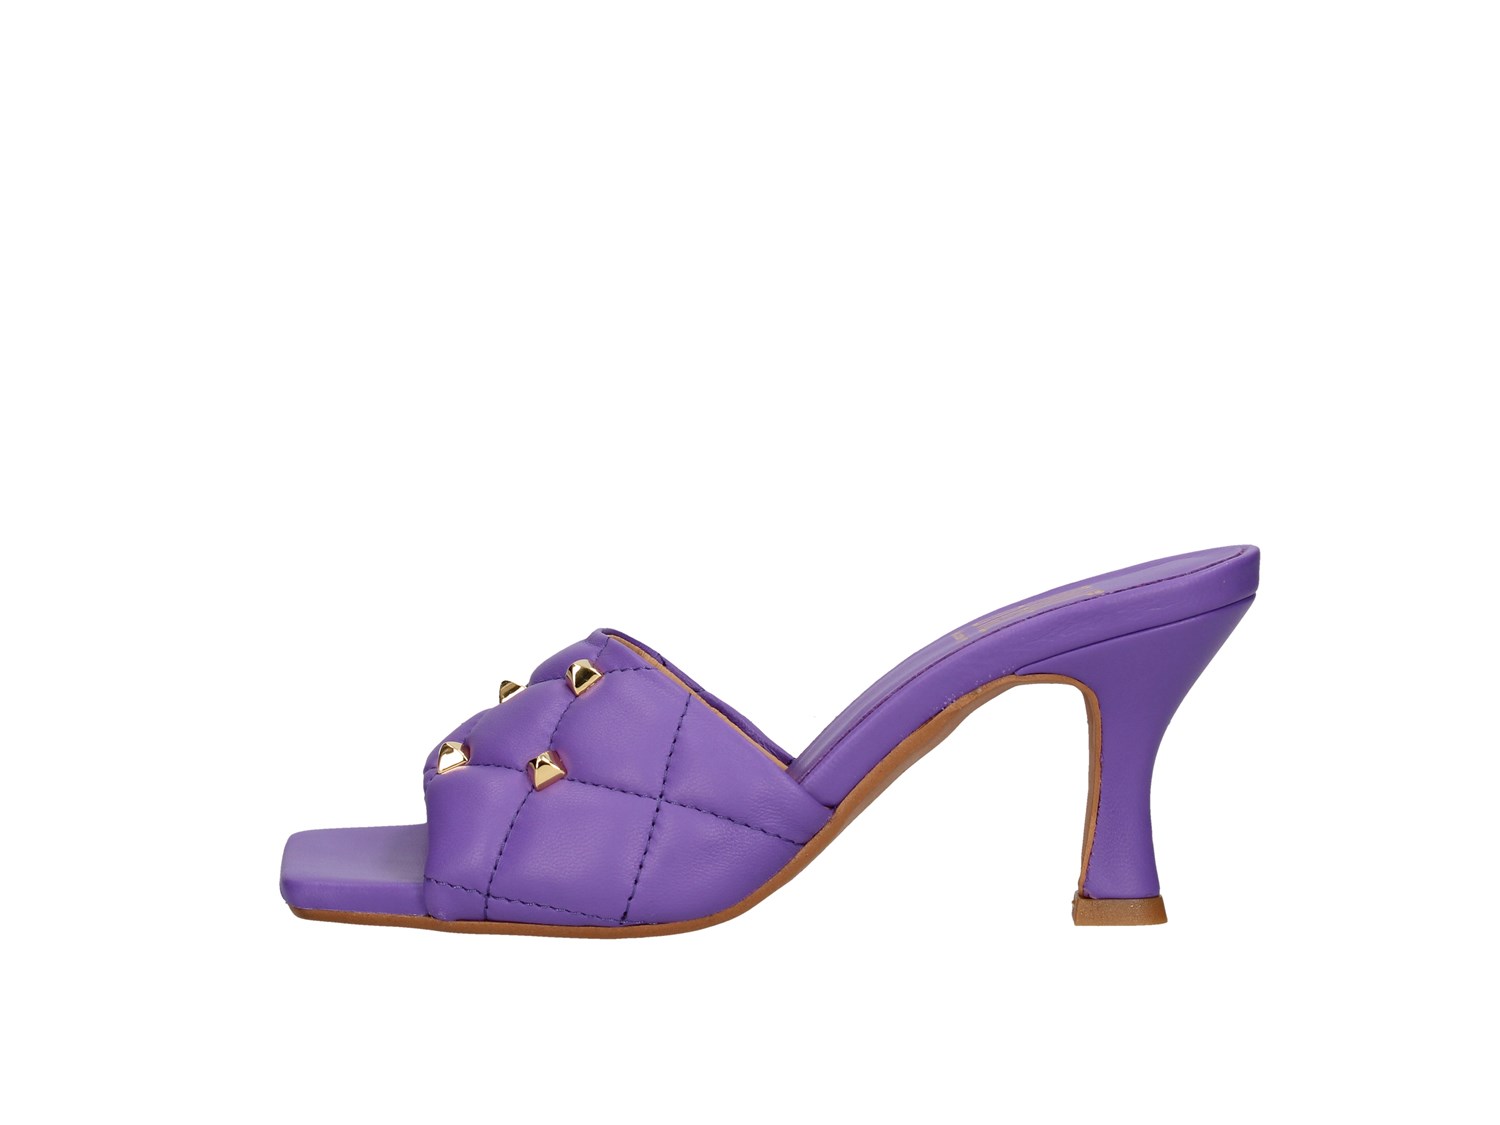 Baliè 587 Violet Shoes Women ousted